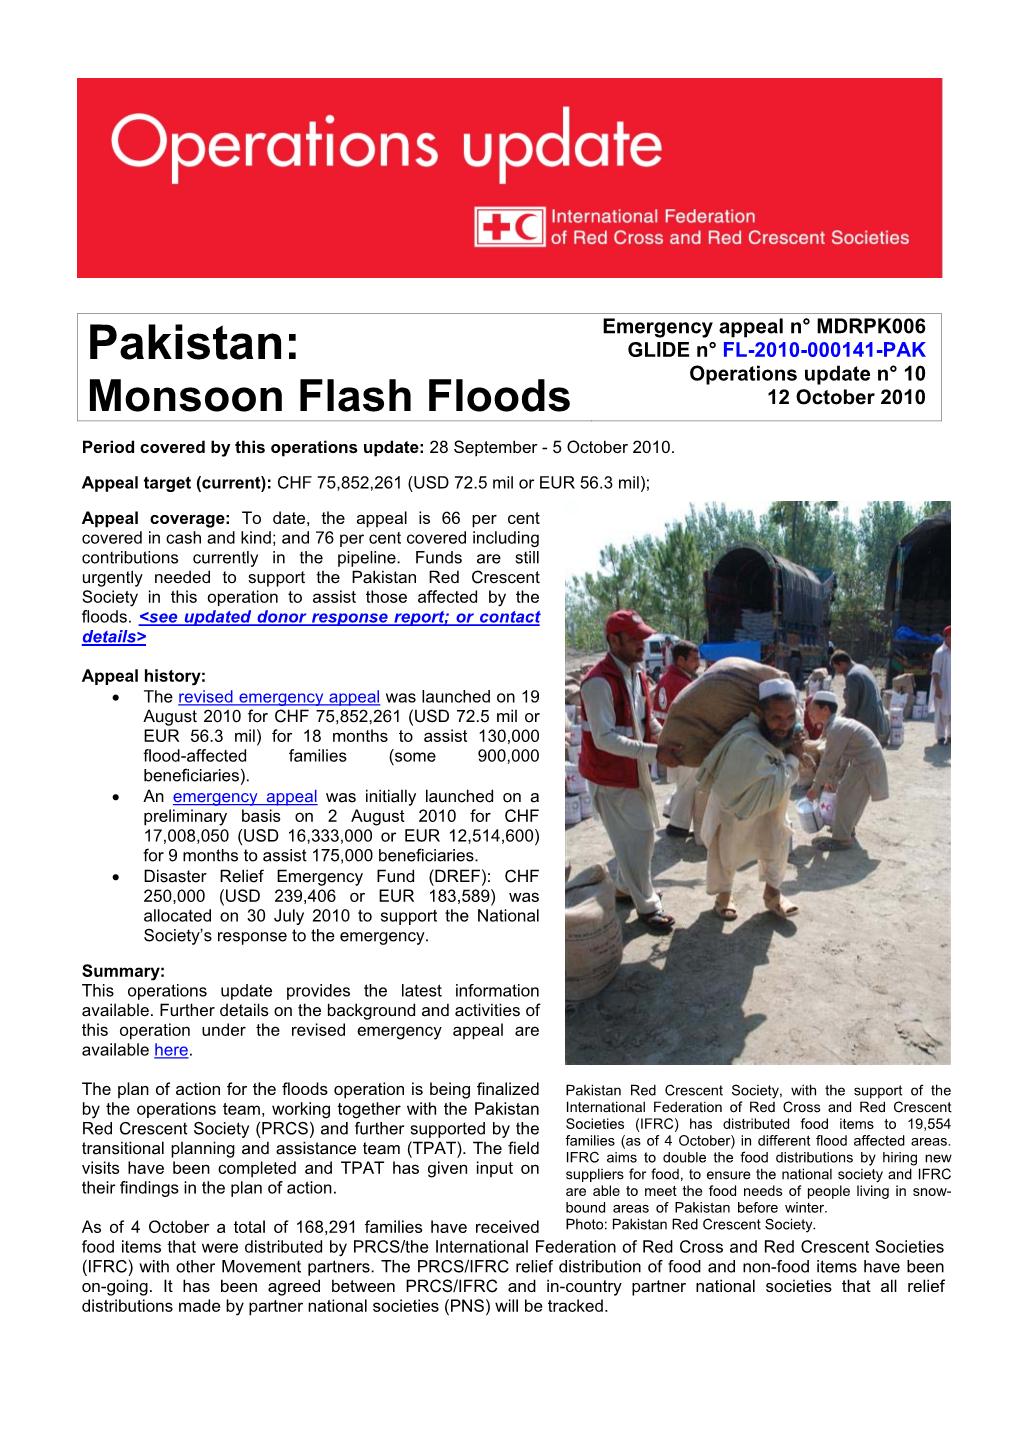 Pakistan: GLIDE N° FL-2010-000141-PAK Operations Update N° 10 Monsoon Flash Floods 12 October 2010